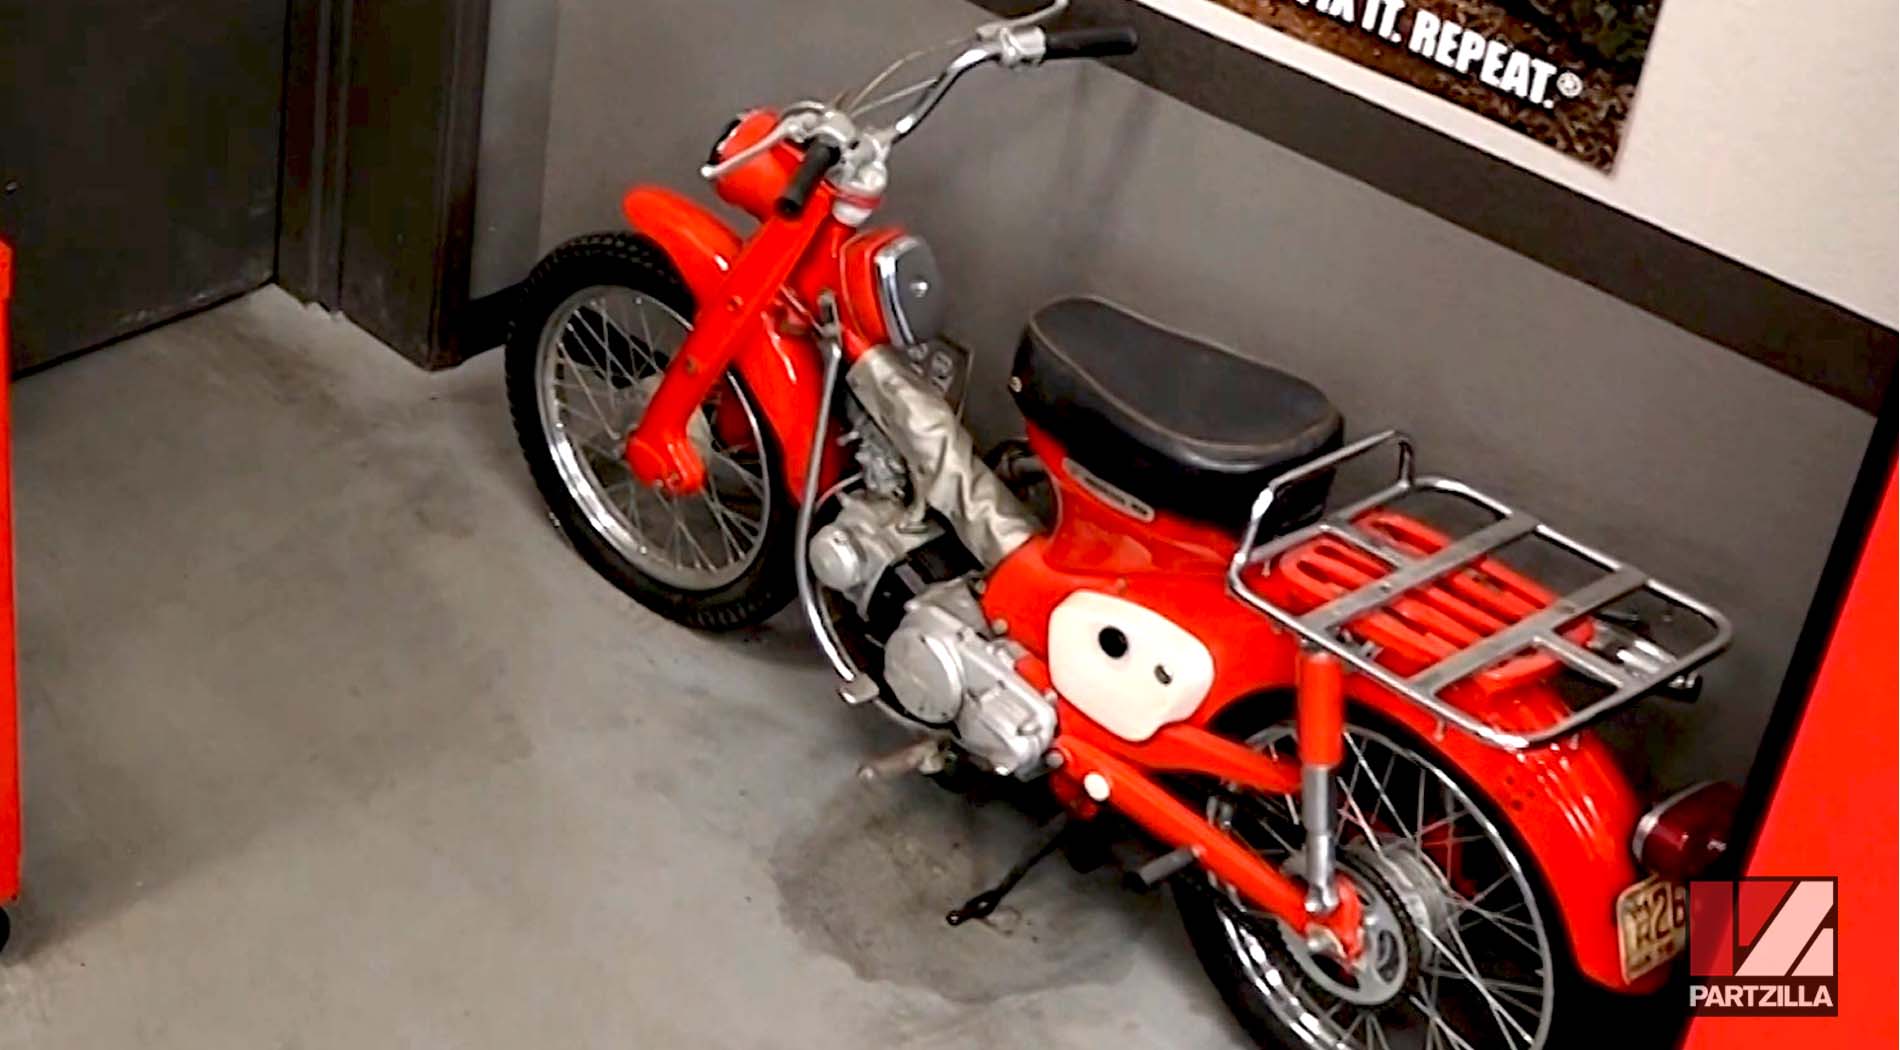 1967 Honda CT90 motorcycle